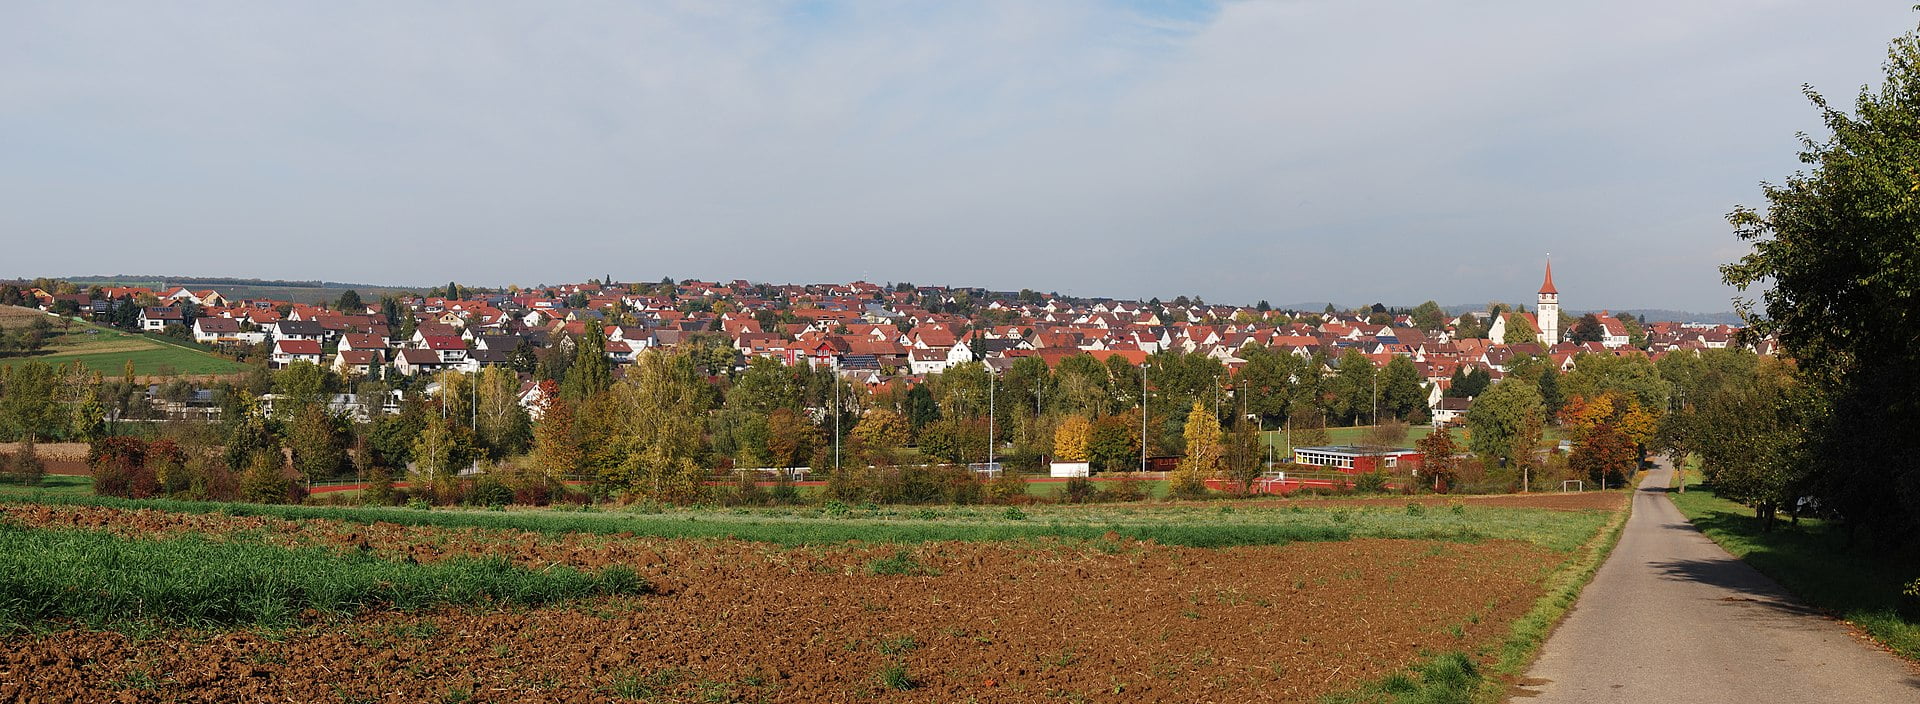 Ilsfeld Panoramaaufnahme - Von Felix König - selbst fotografiert (Nikon D60), CC BY 3.0